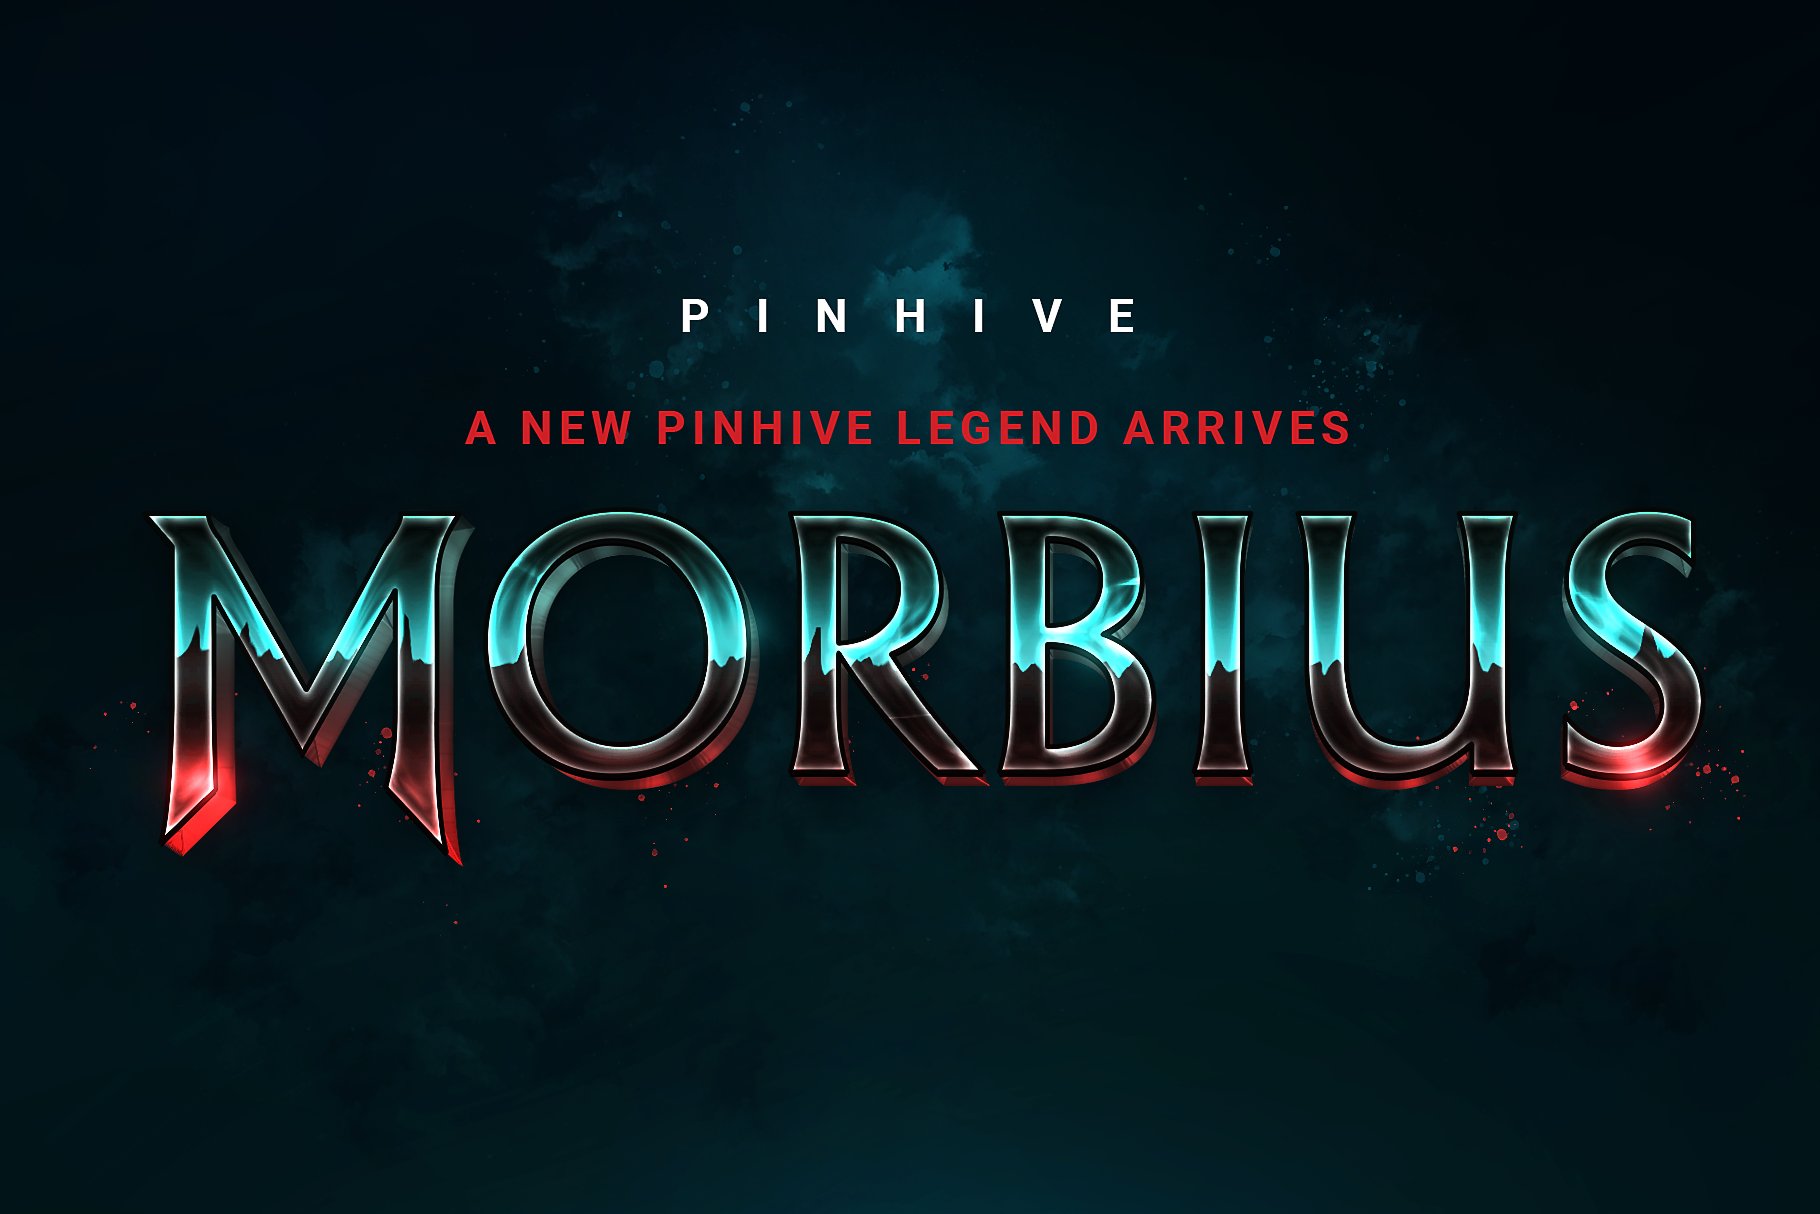 Morbius Movie Text Effectcover image.